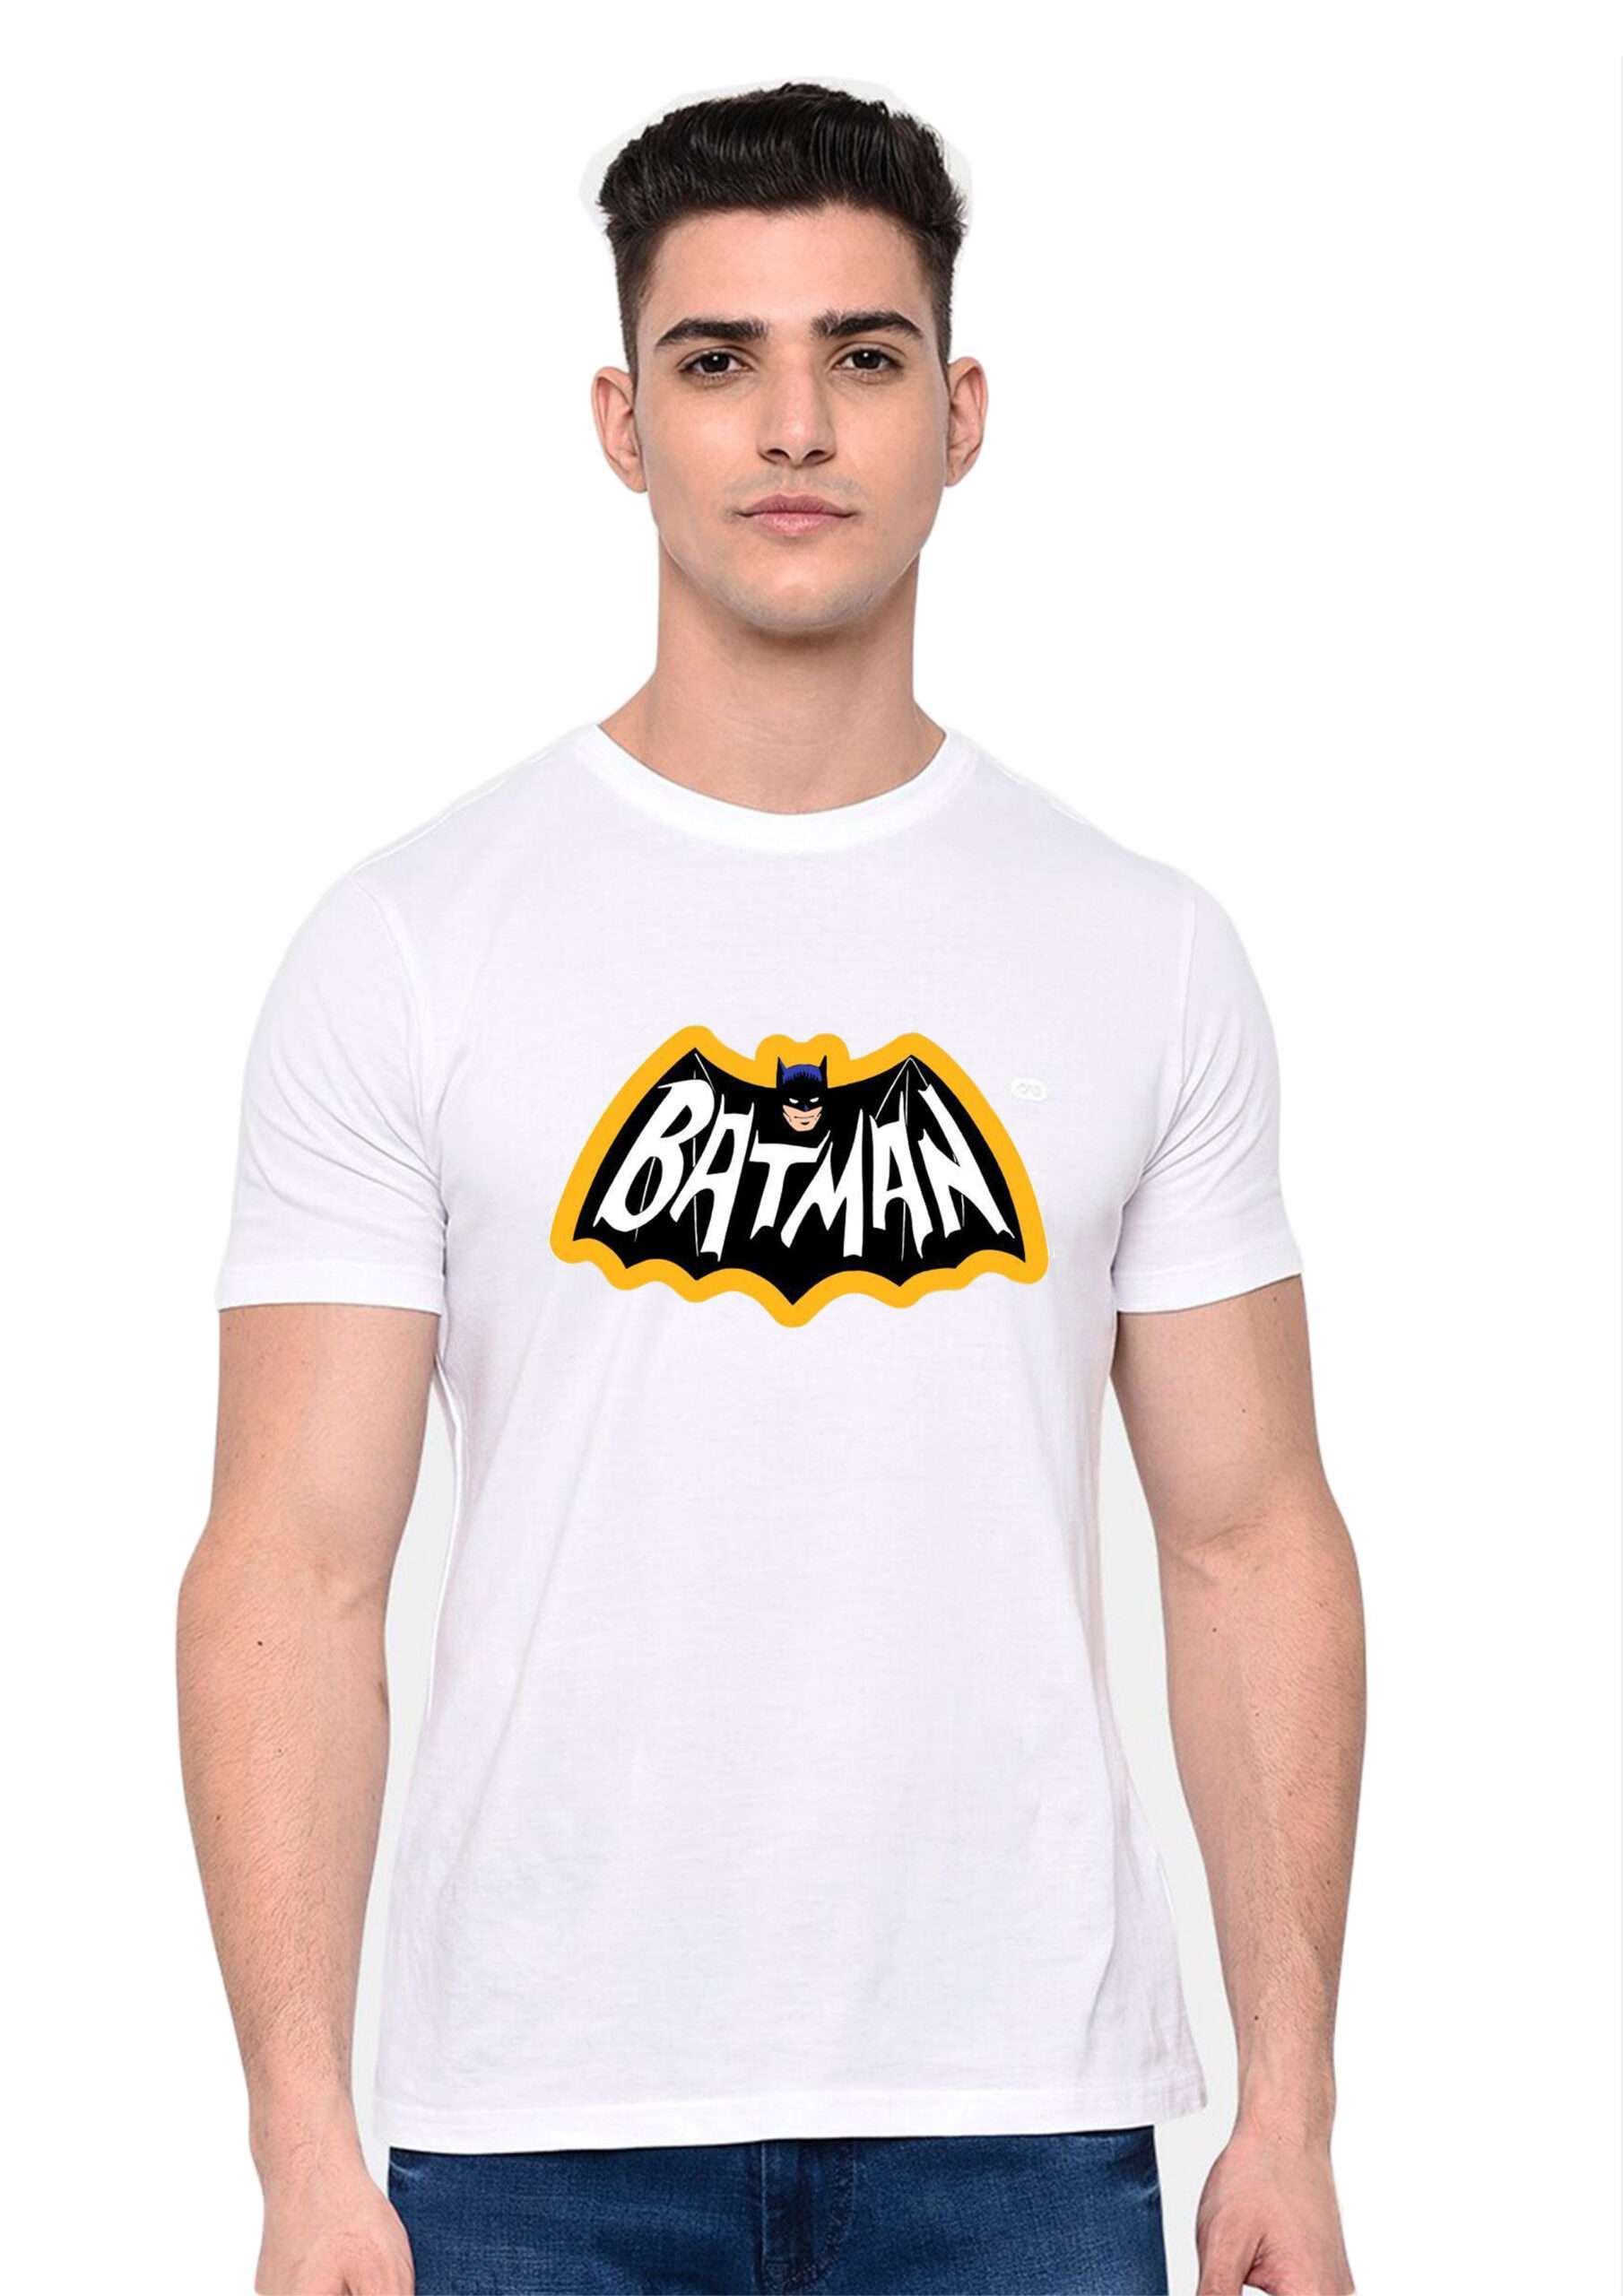 Batman DC Comics T-Shirt - Anime Ape